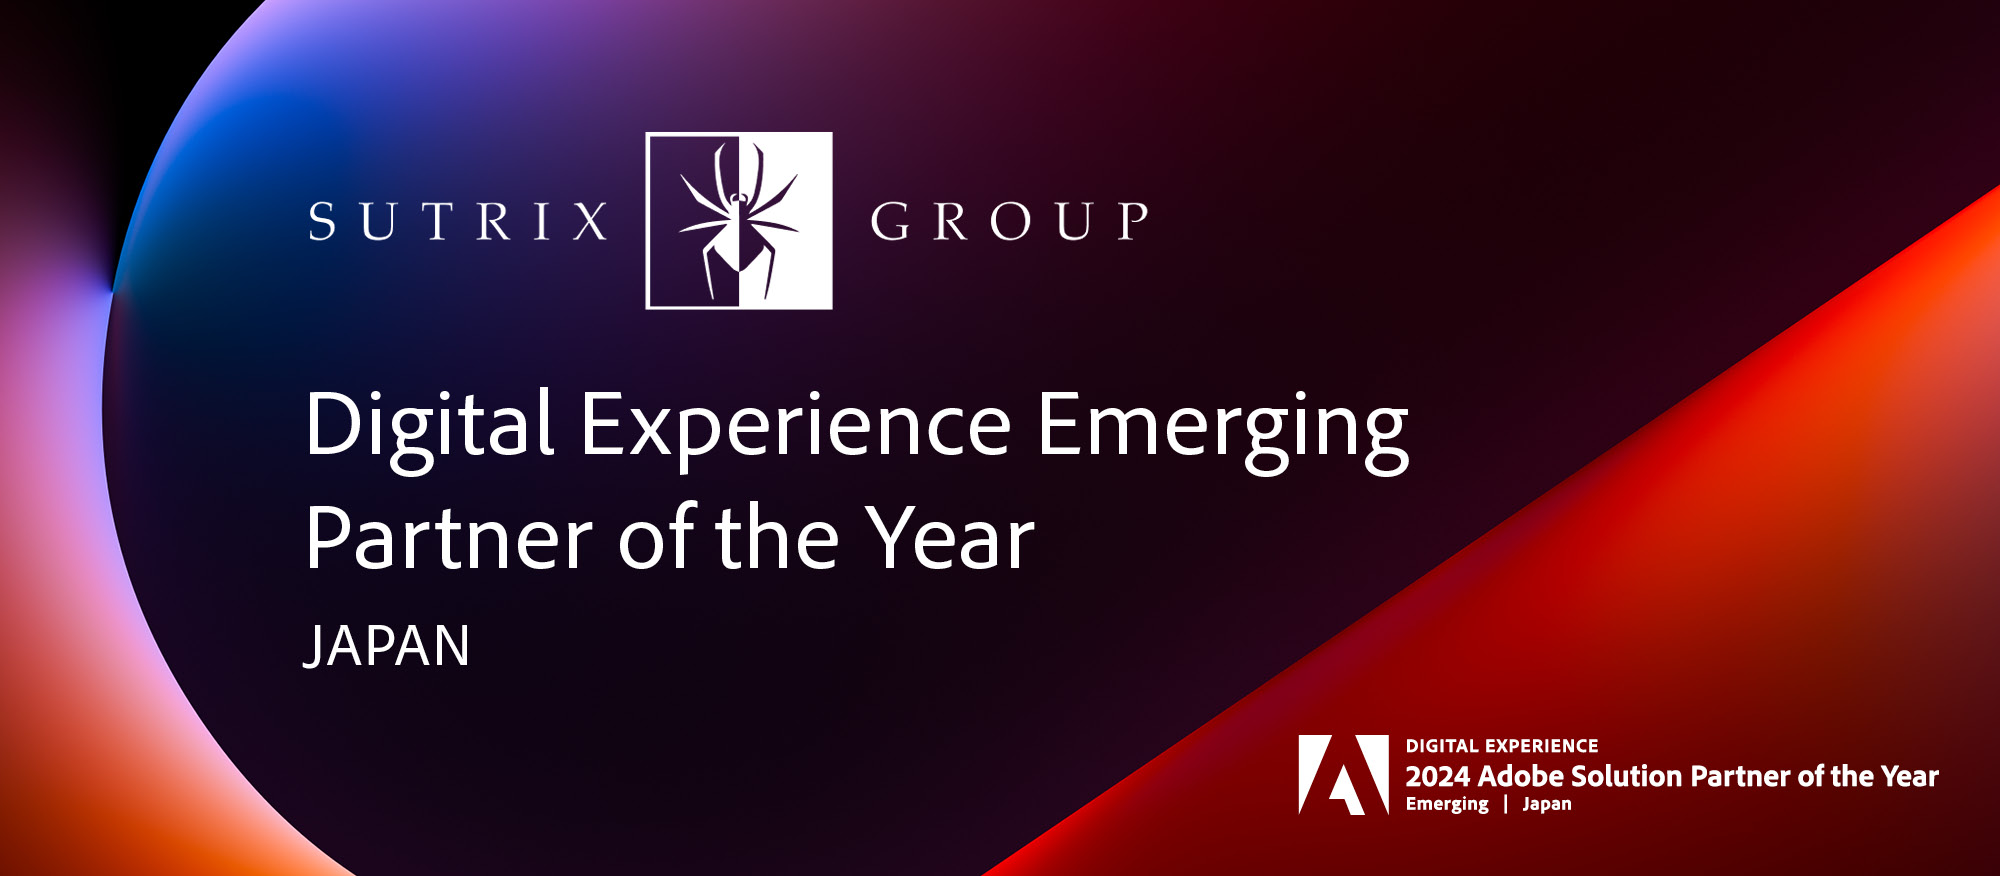 Adobe Digital Experience Emerging Partner of the Year JAPAN